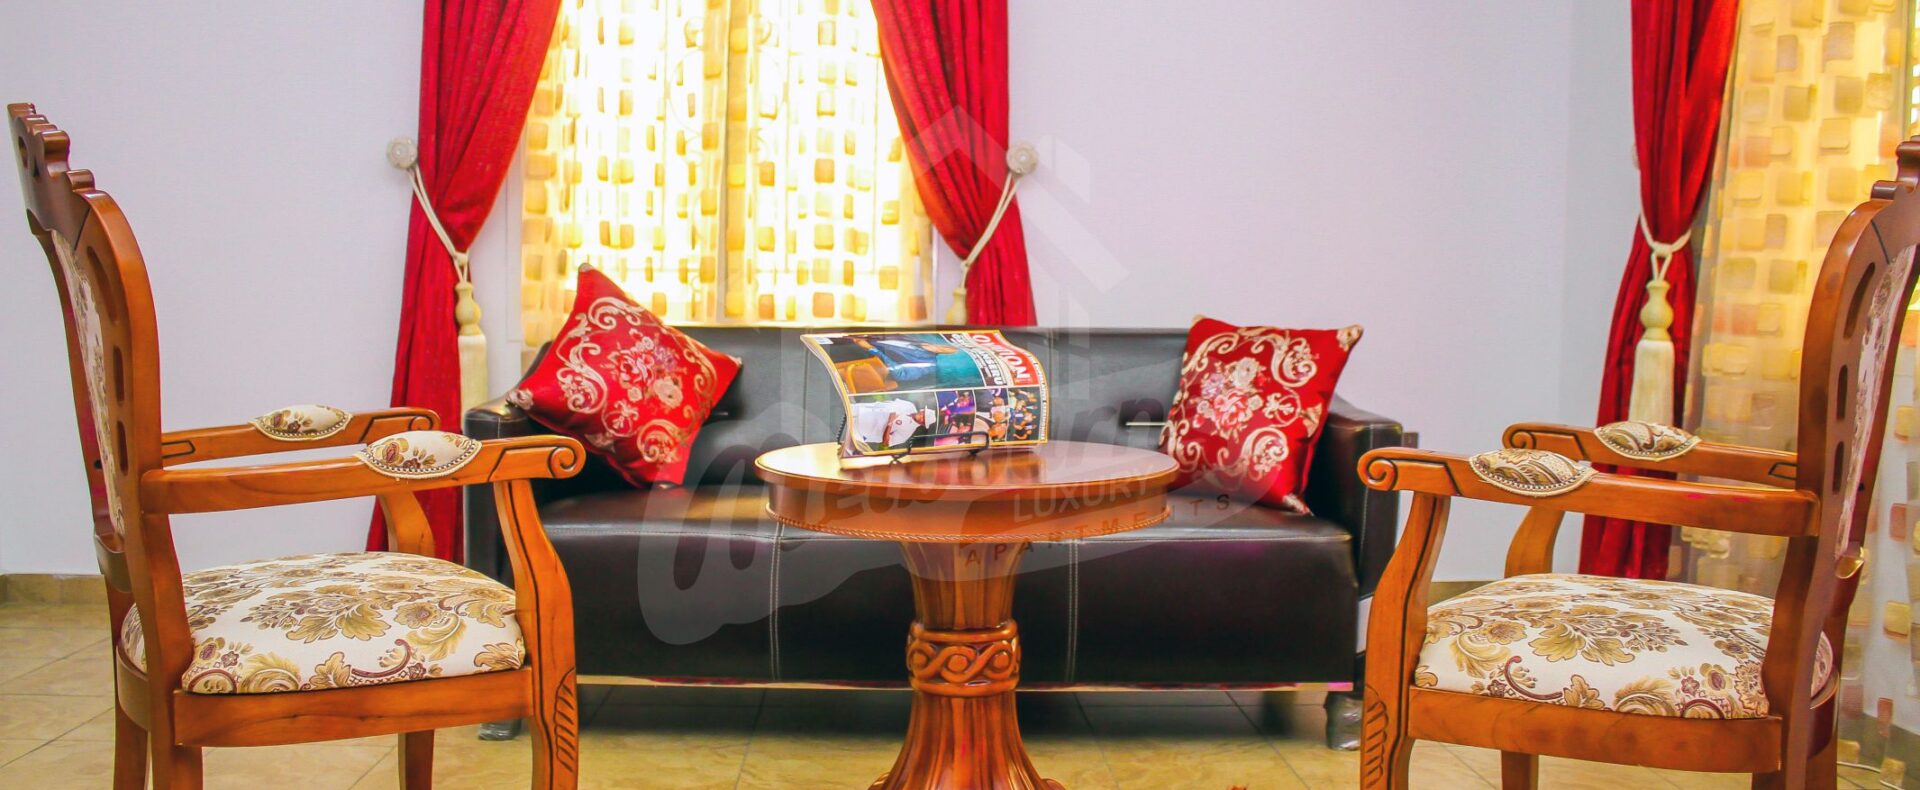 6 Bedroom Apartment For Shortlet In Ikeja Nigeria